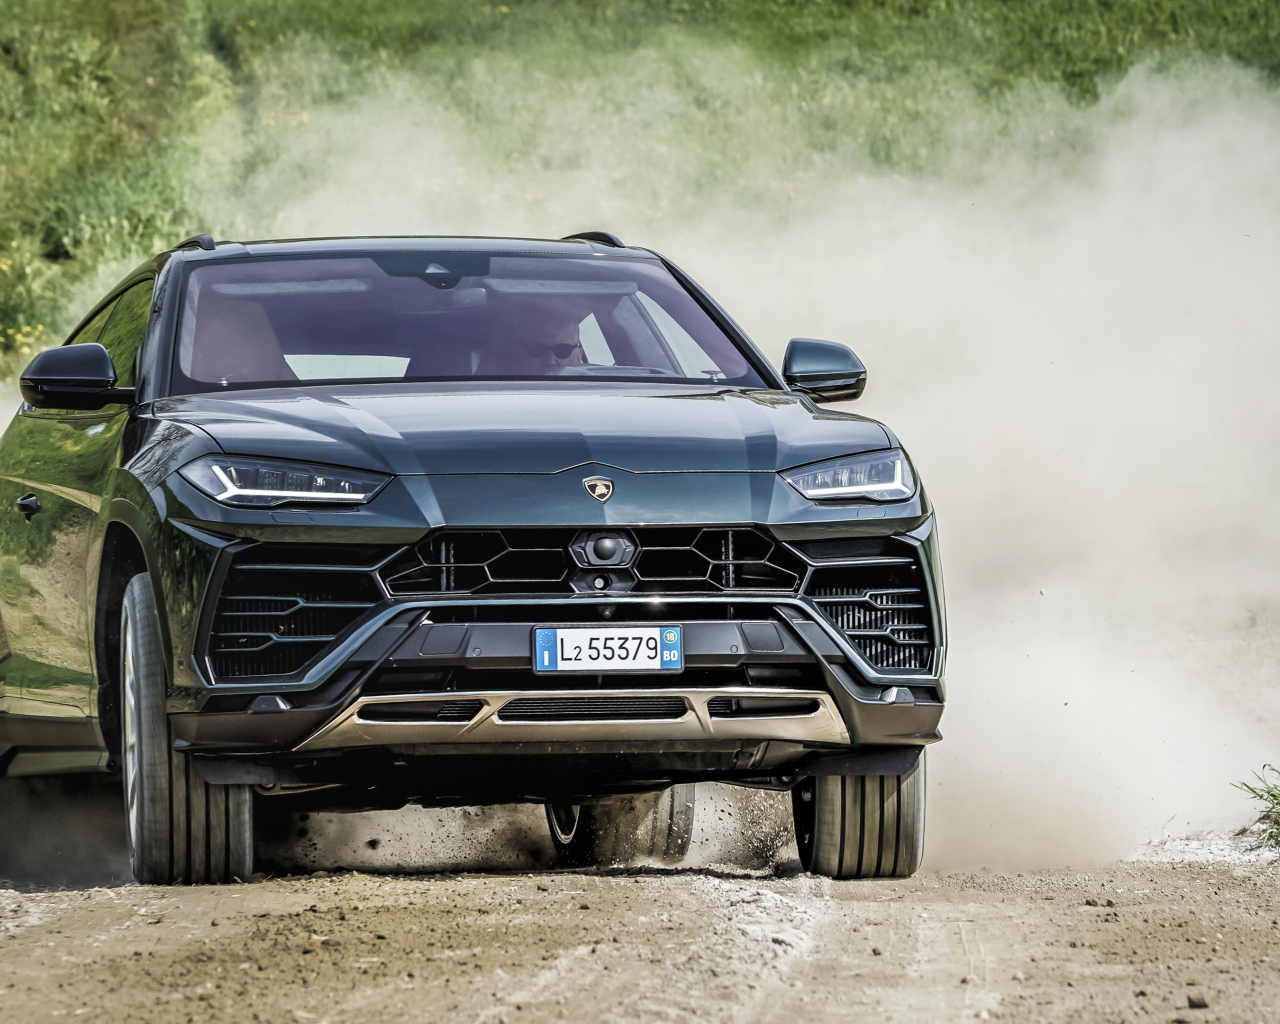 SUV Lamborghini Urus 2018 on the road in the dust